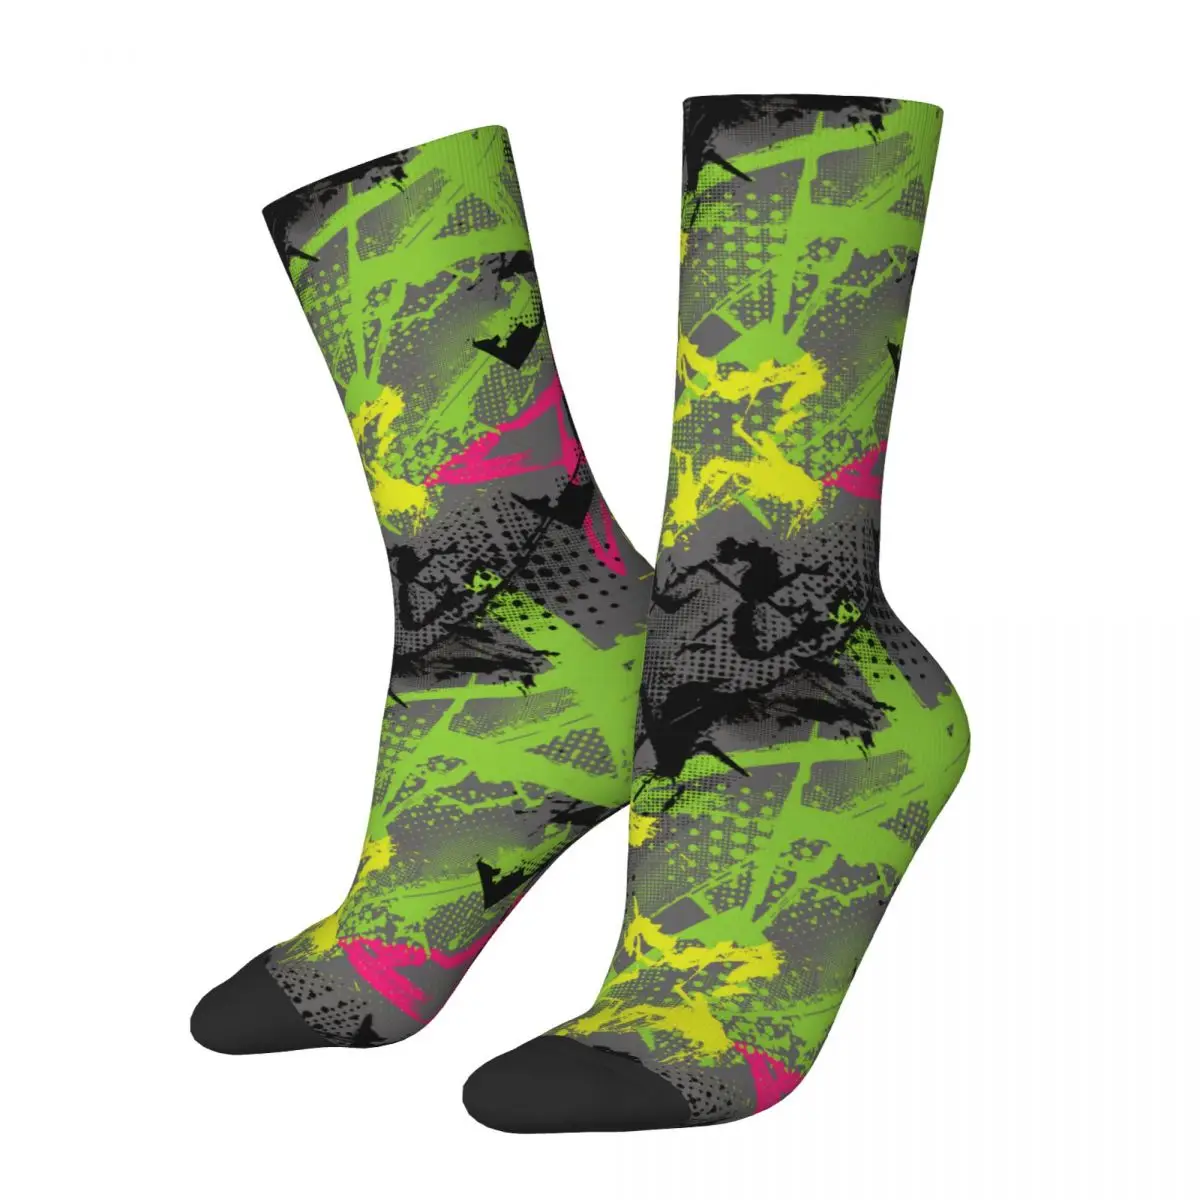 

Retro Graffiti Style With Style Men's Socks Neon Pattern Unisex Novelty Seamless Printed Crazy Crew Sock Gift